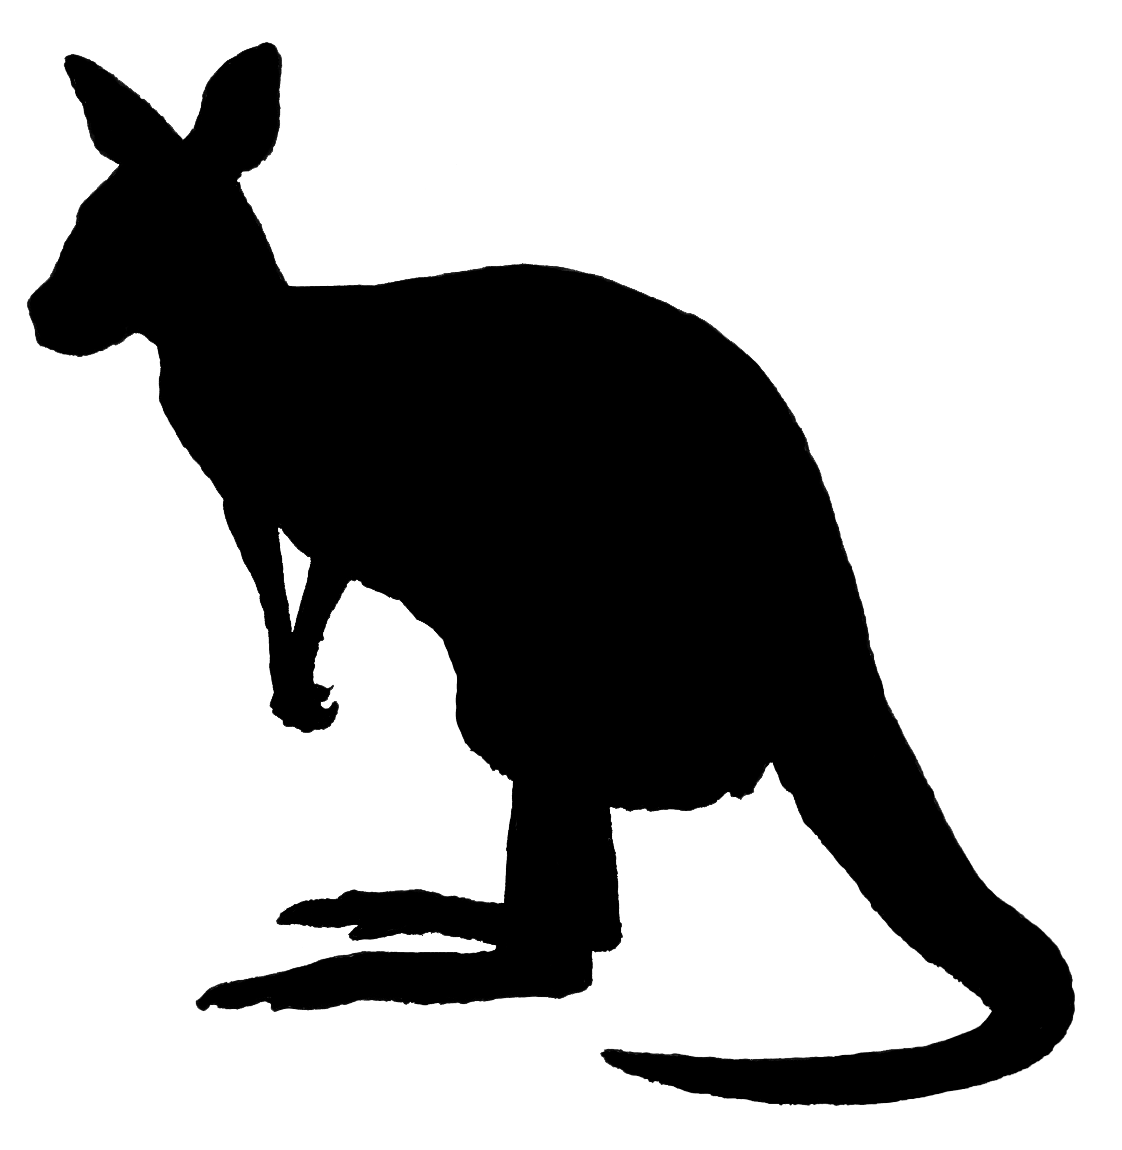 Kangourou silhouette PNG image